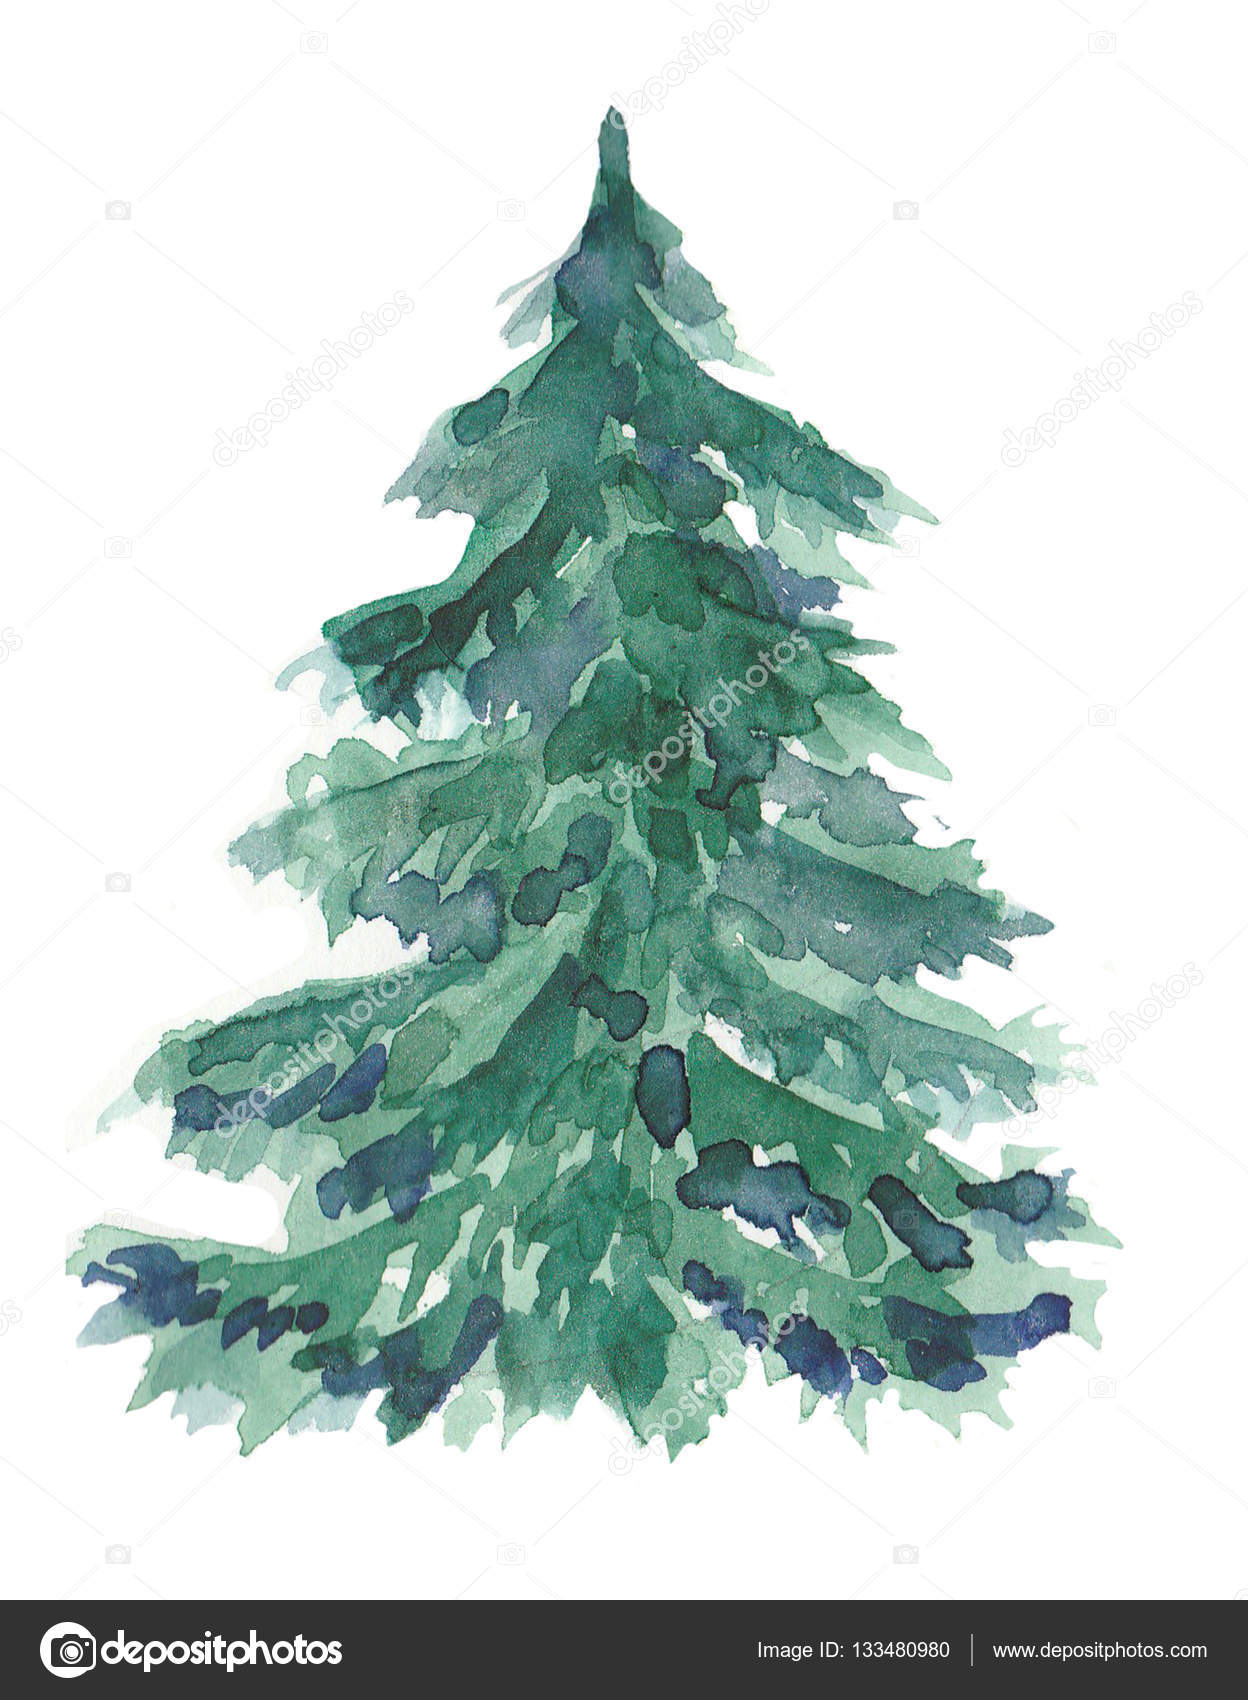 Download Watercolor Christmas Trees / Christmas Tree Watercolor Watercolor Christmas Tree Watercolor ...